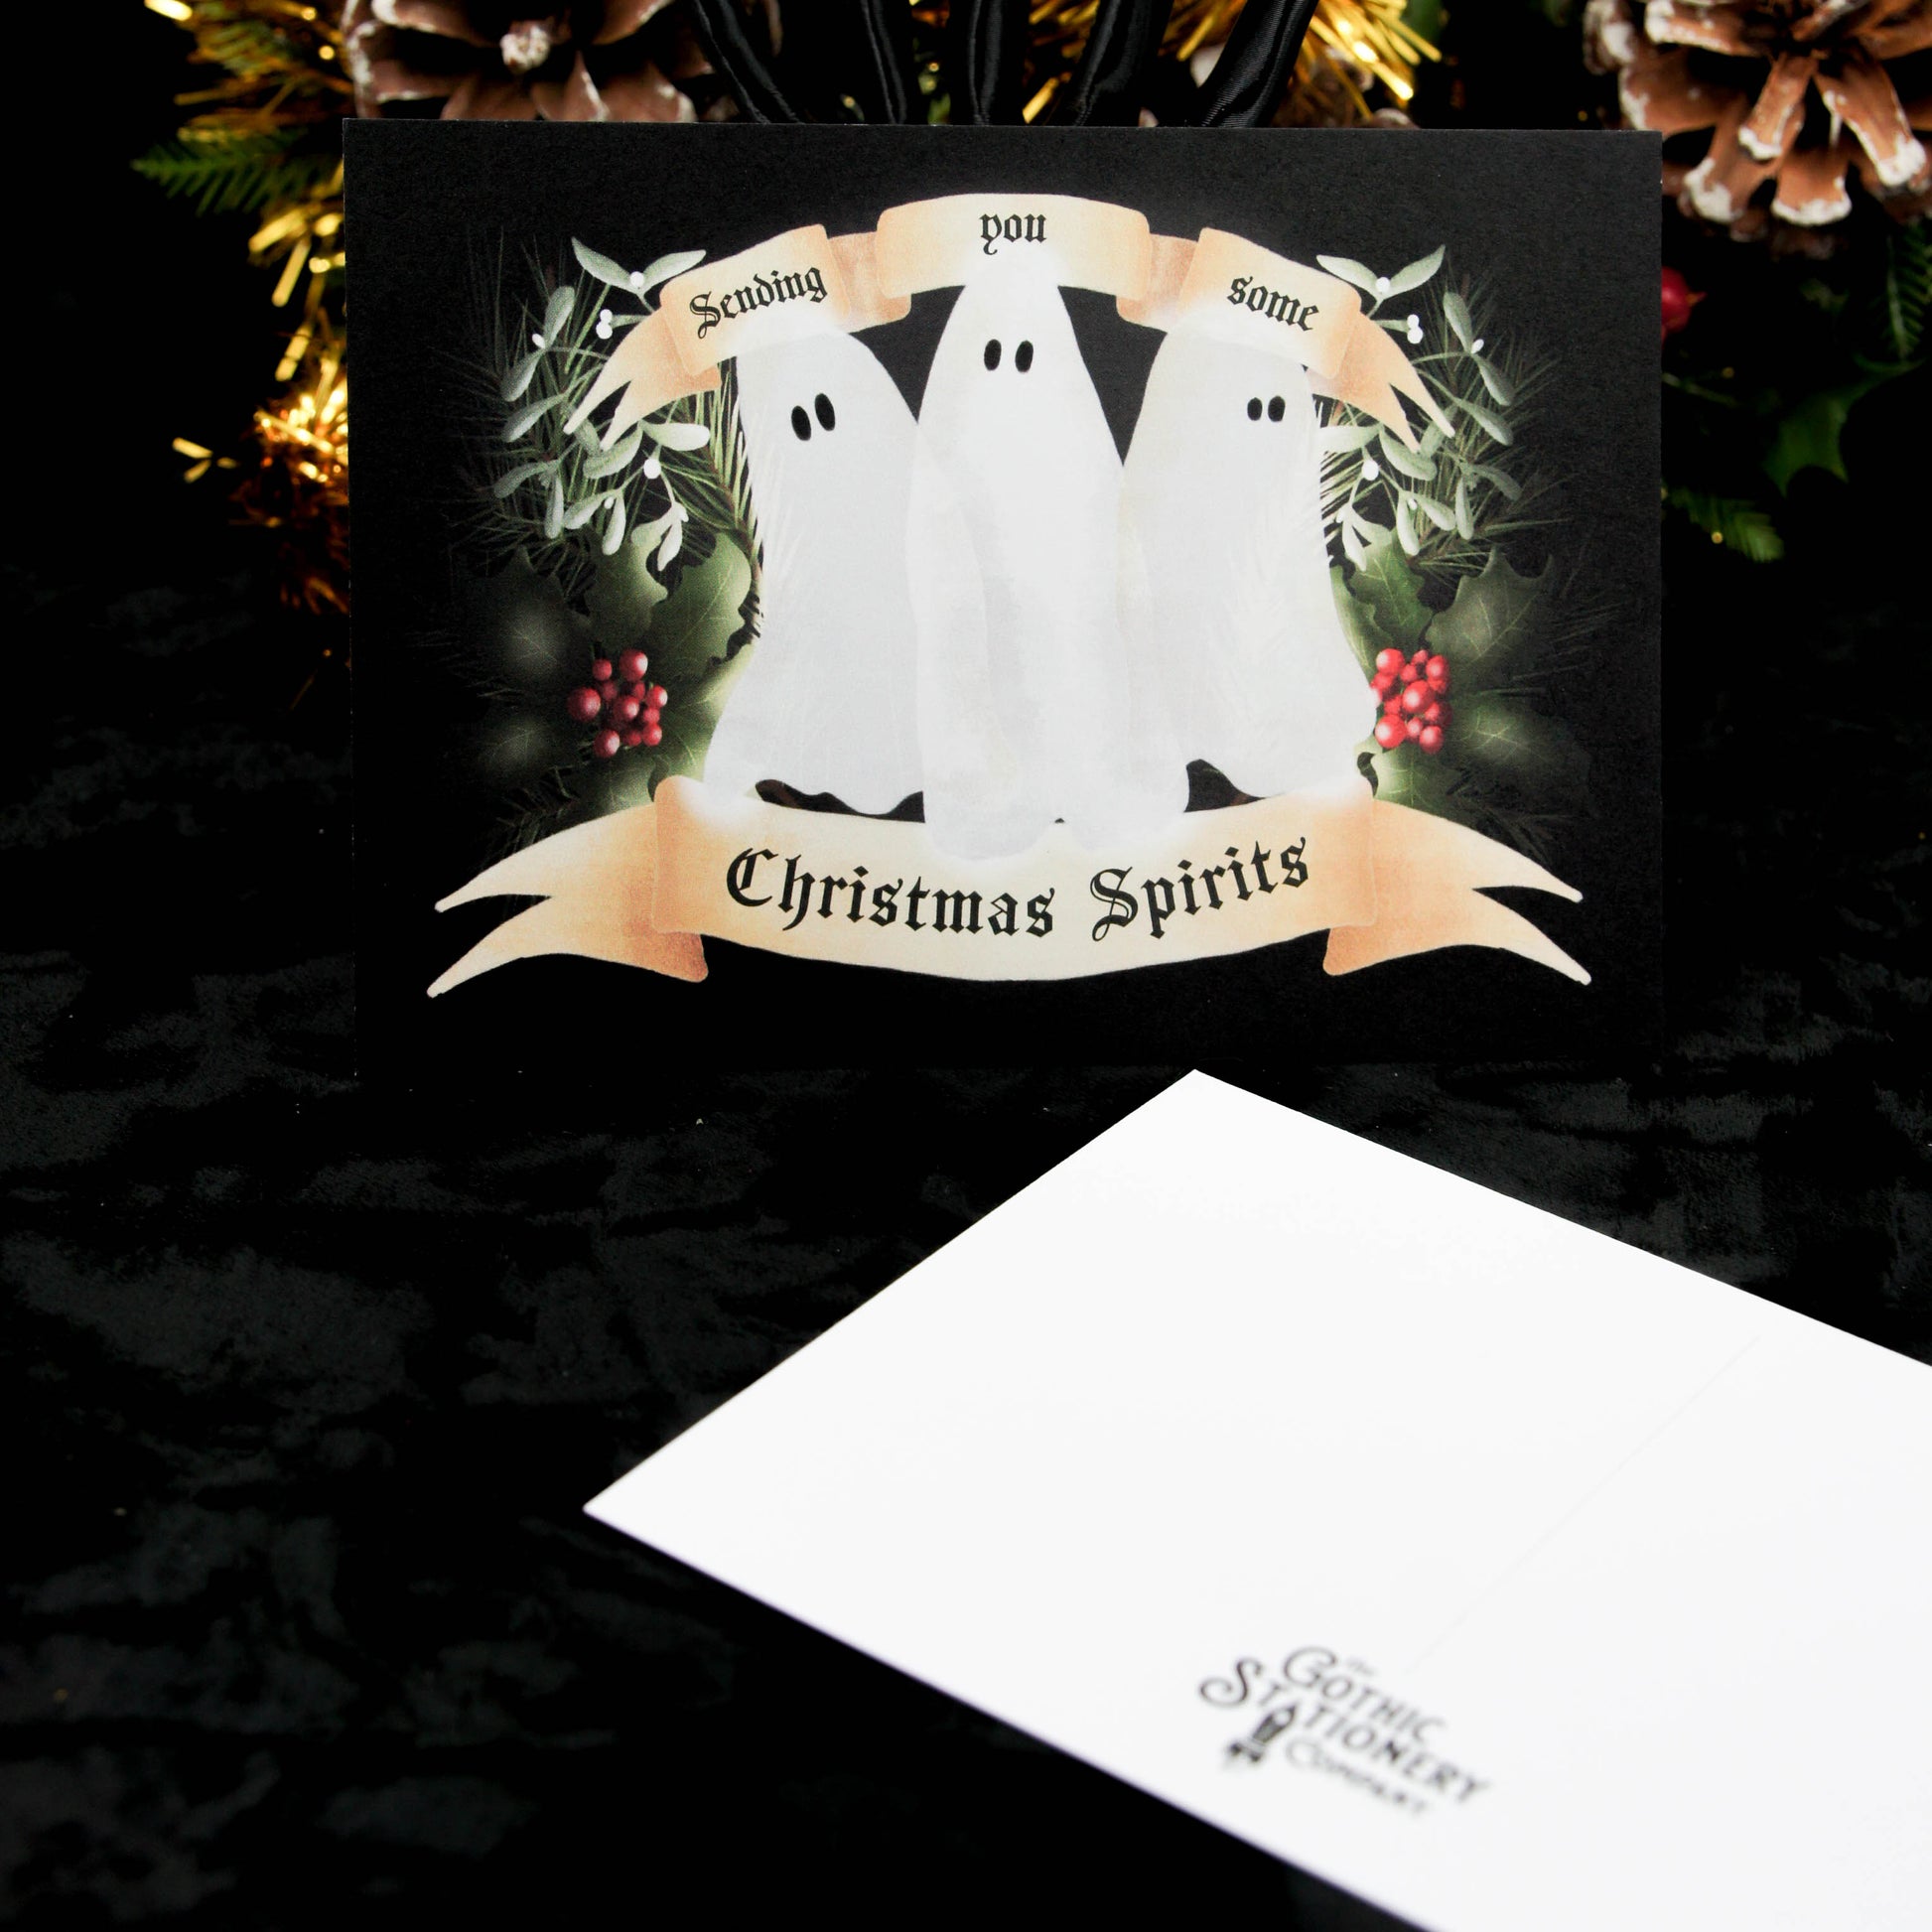 Gothmas Gothic Christmas Spirits Postcard